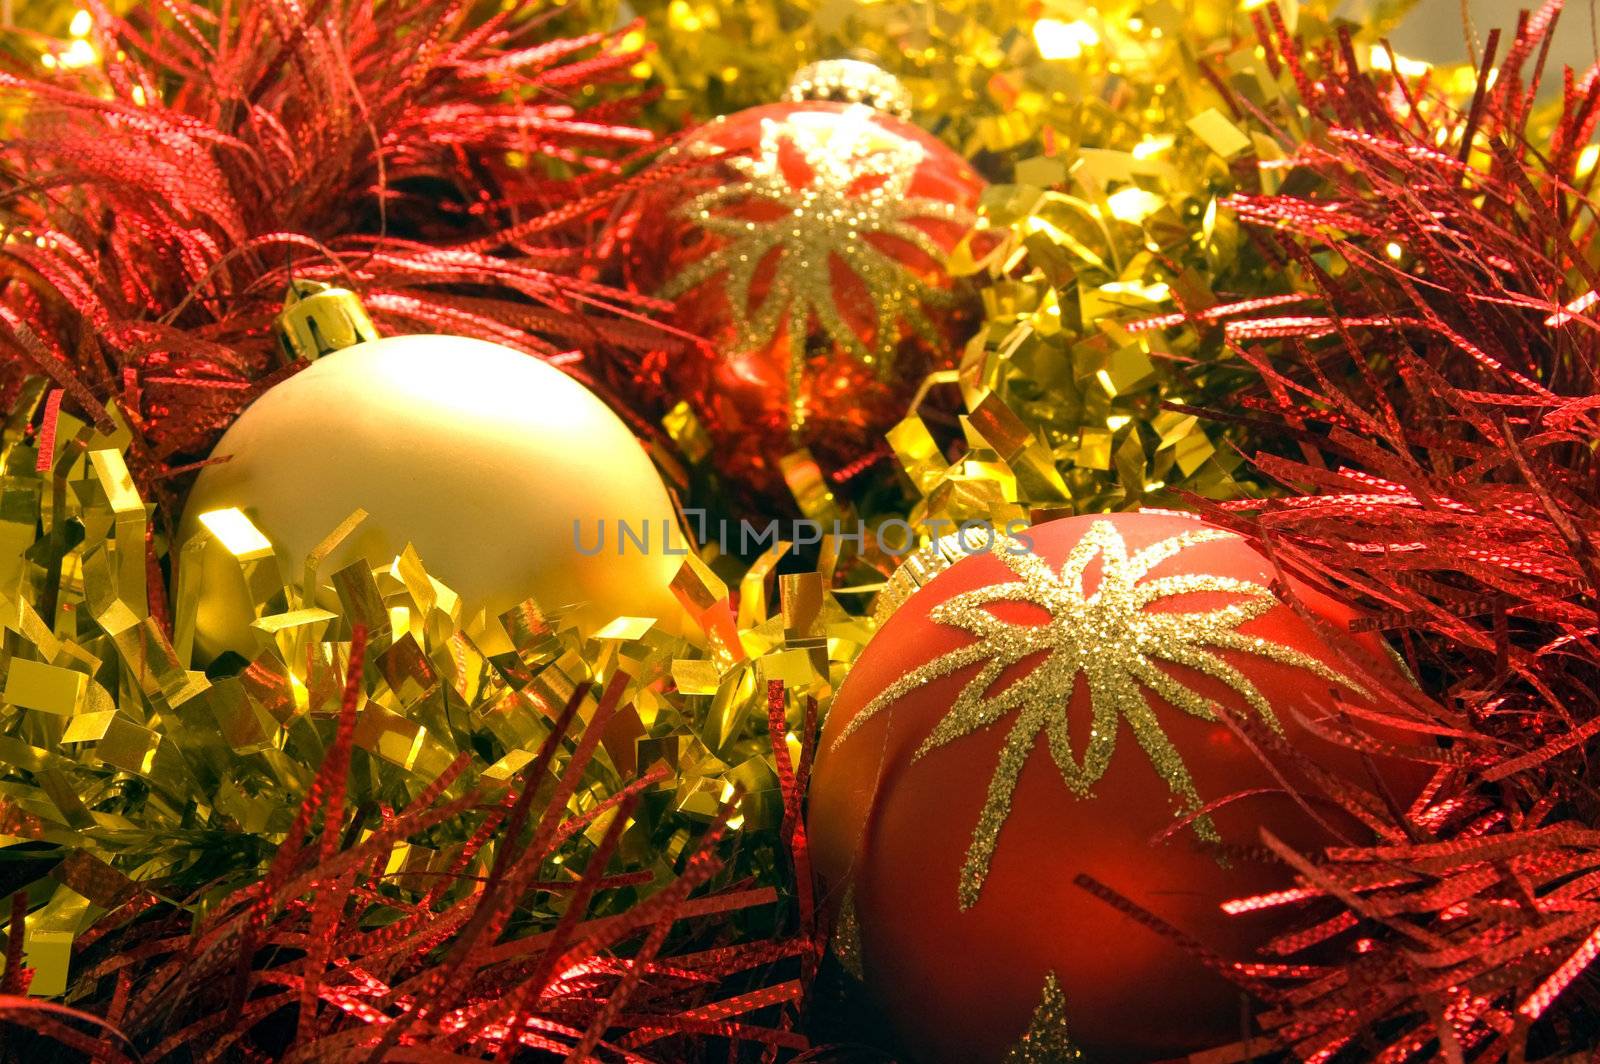 A Colourful Festive Christmas Tree Decorations Photo